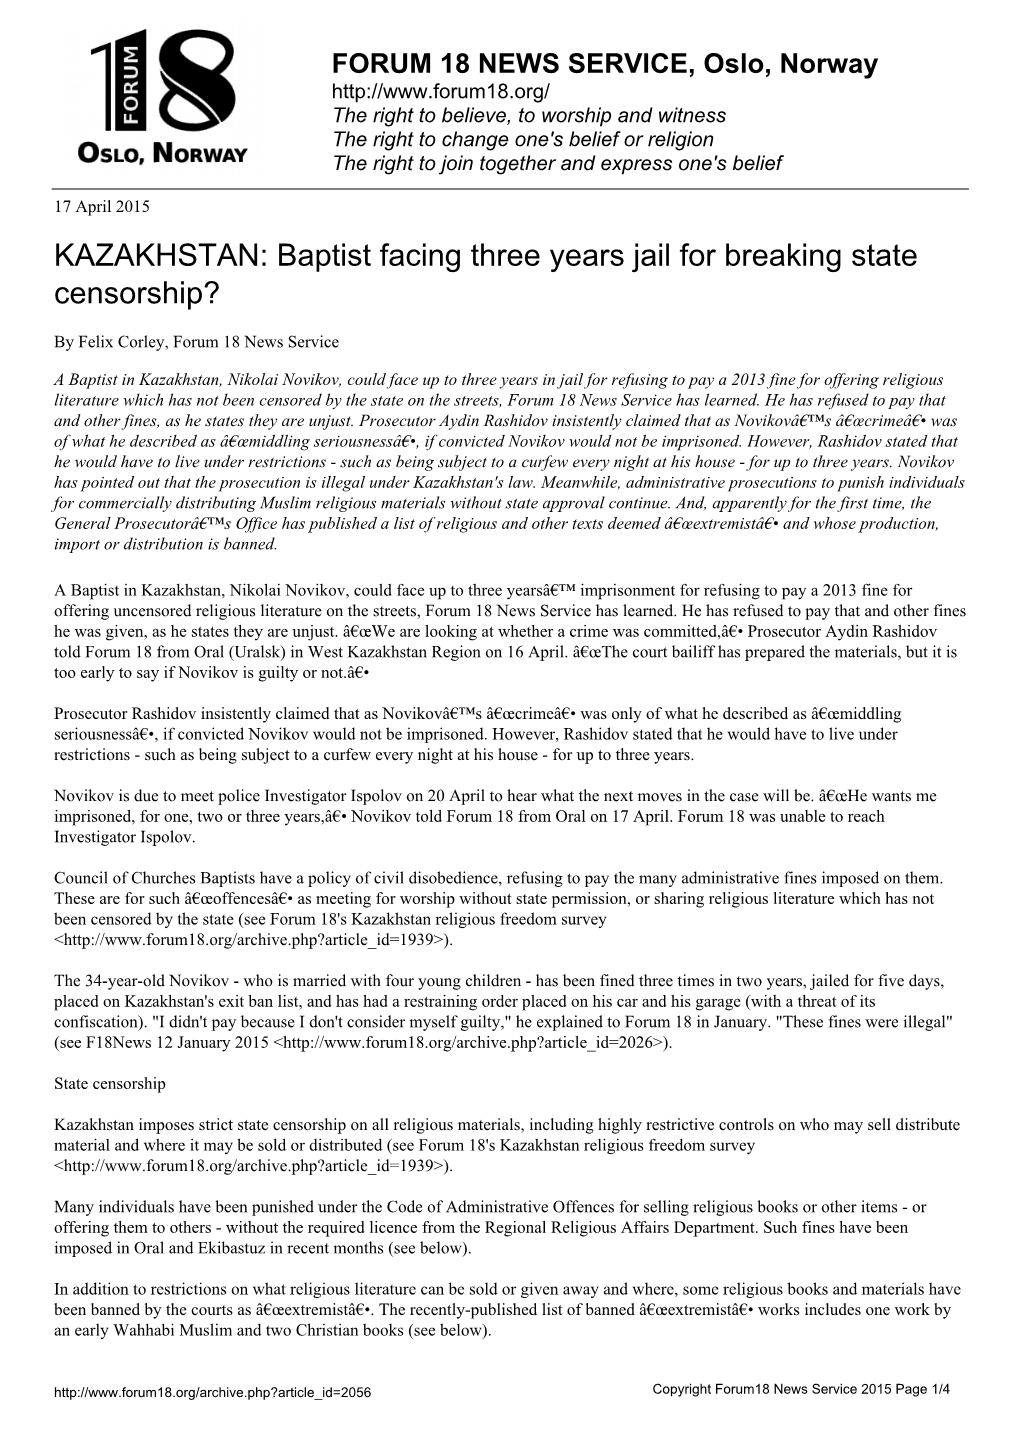 KAZAKHSTAN: Baptist Facing Three Years Jail for Breaking State Censorship?